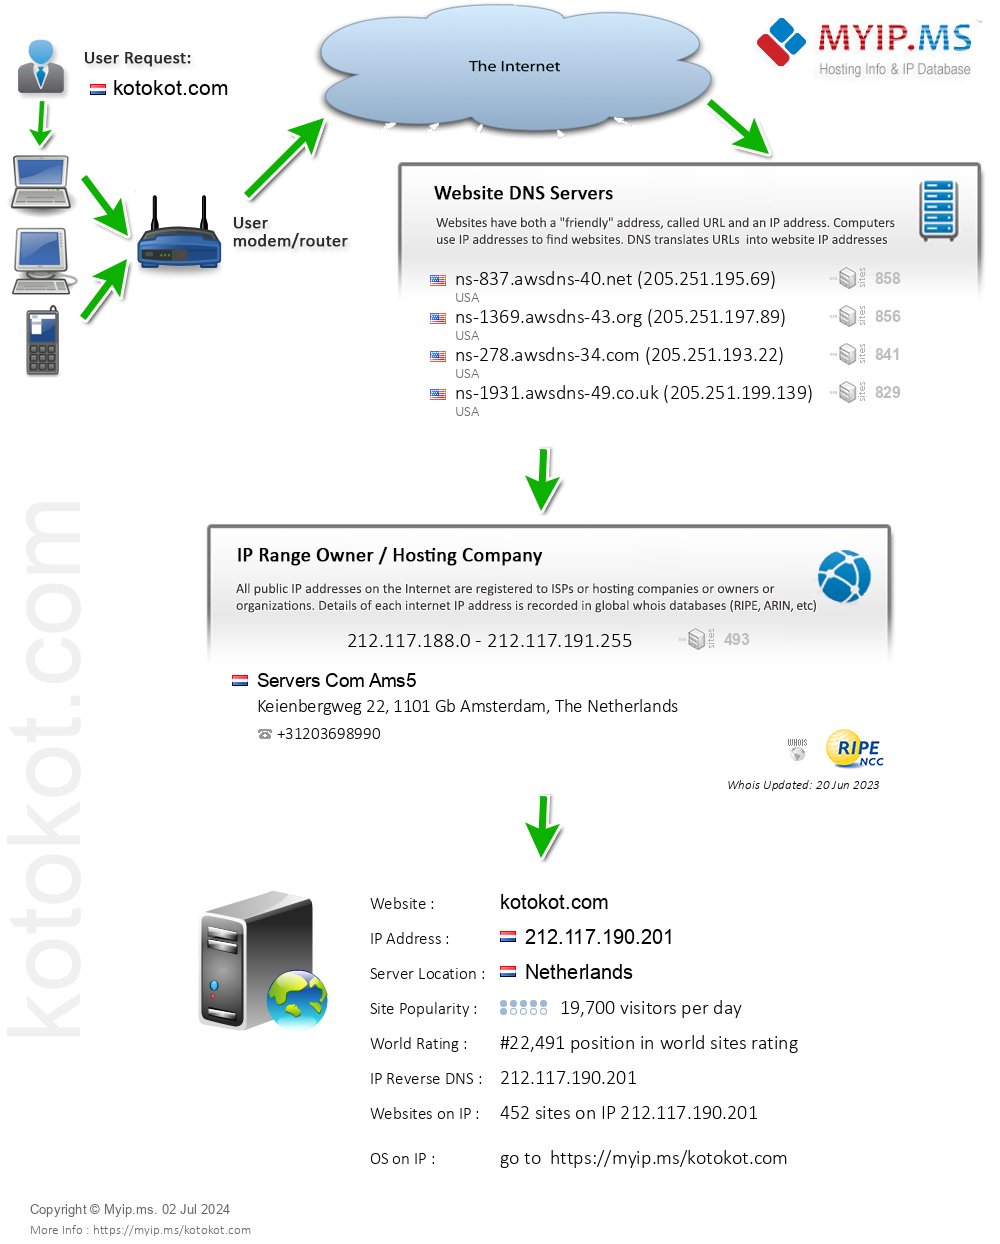 Kotokot.com - Website Hosting Visual IP Diagram